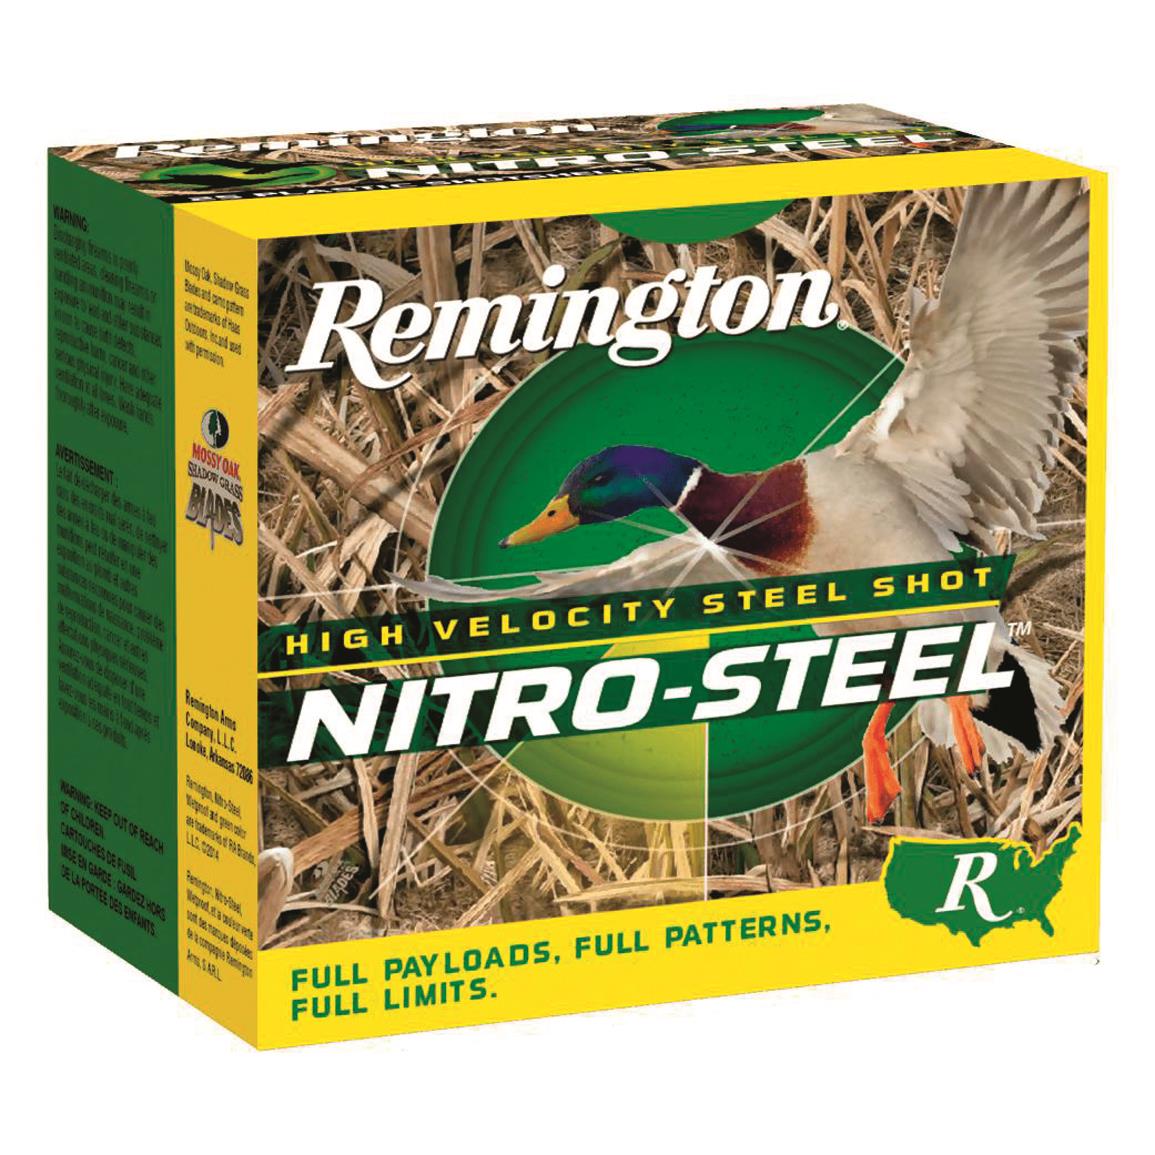 Remington Nitro-Steel High-Velocity, 20 Gauge, 3" Shot Shells, 1 oz., 250 Rounds